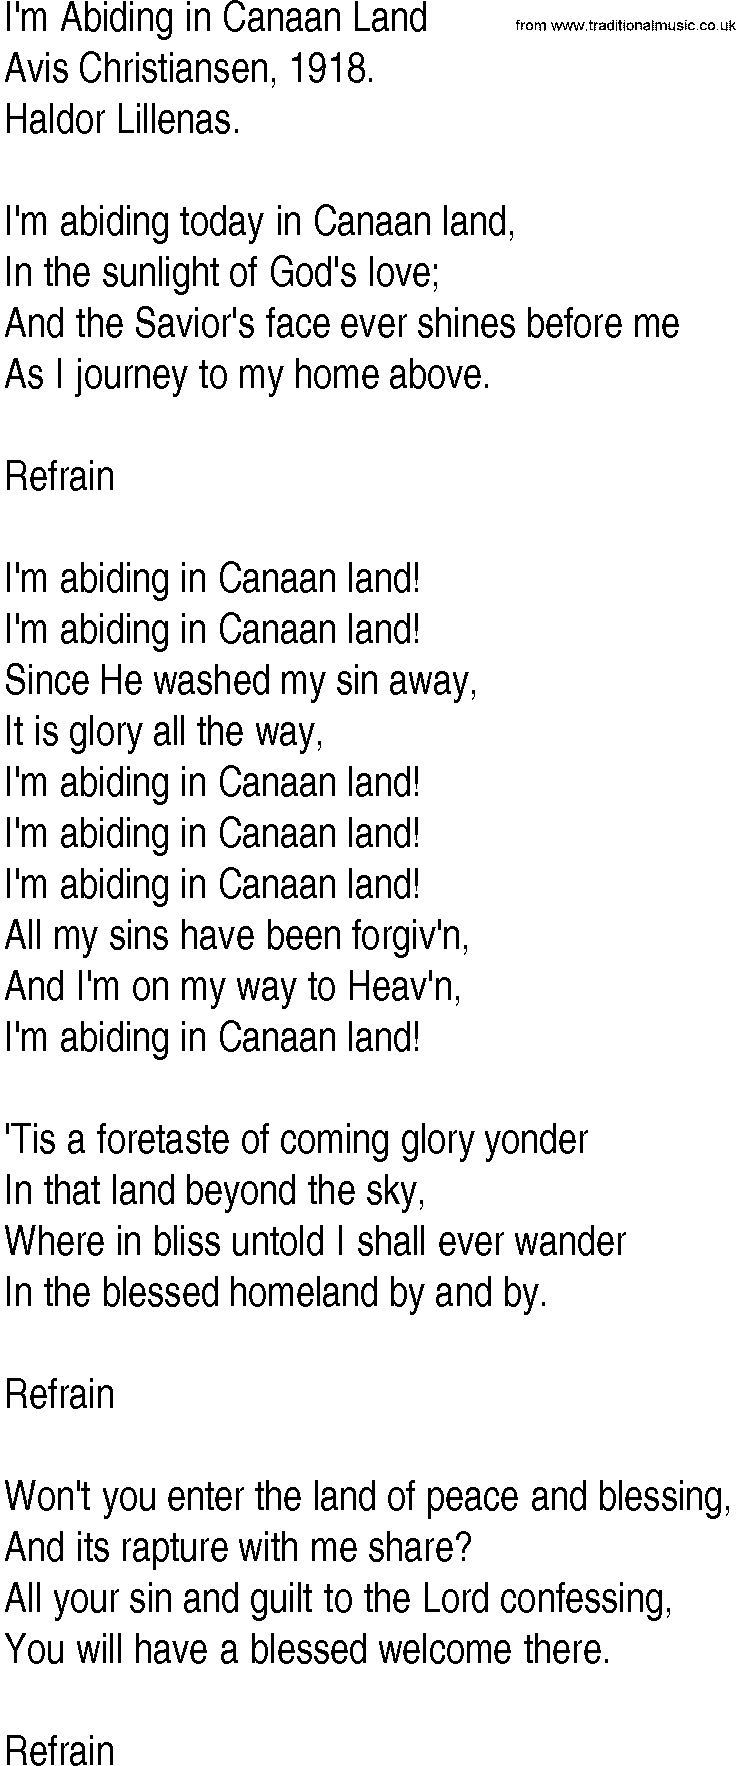 Hymn and Gospel Song: I'm Abiding in Canaan Land by Avis Christiansen lyrics